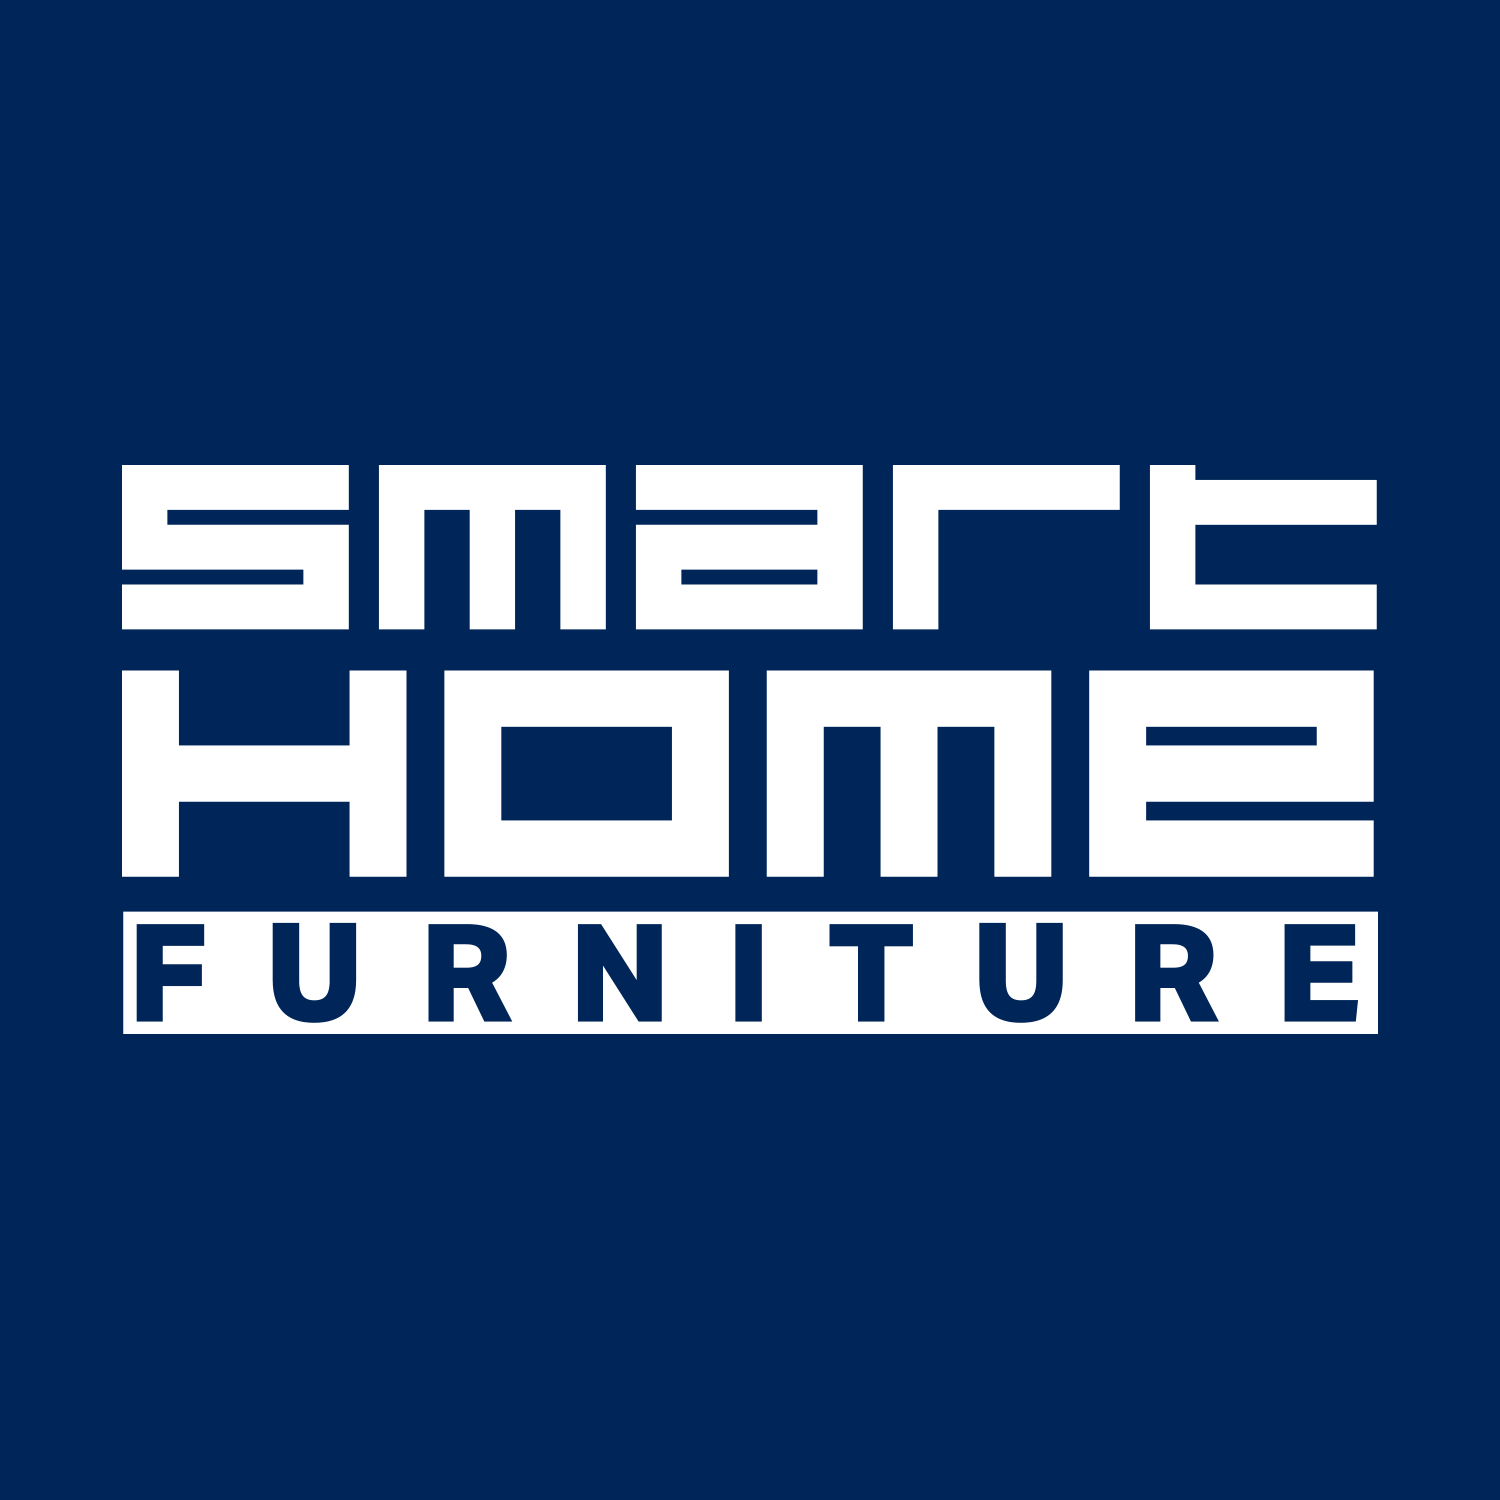 Smart Furniture